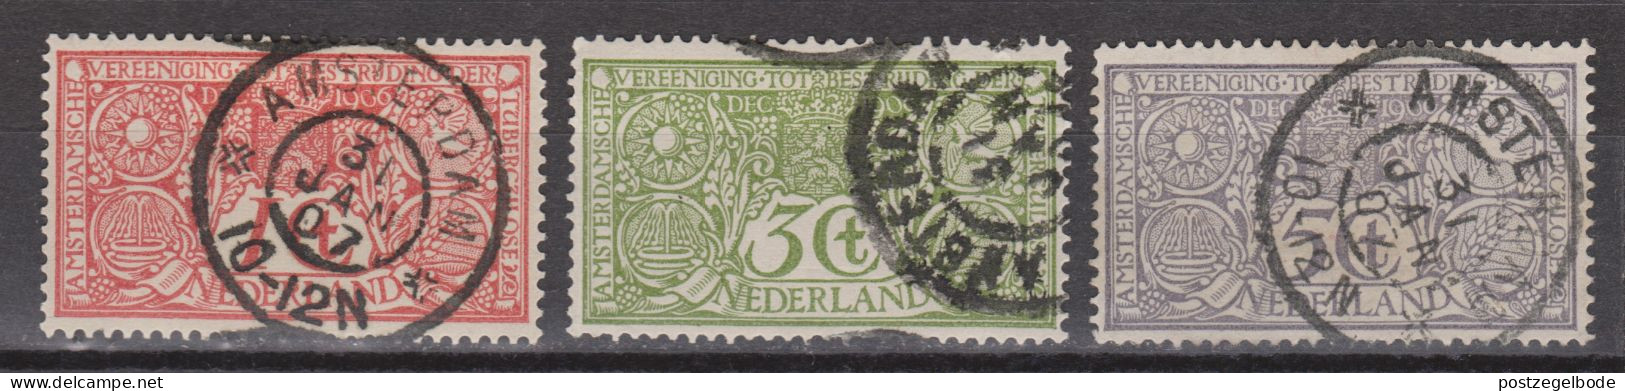 NVPH Nederland Netherlands Pays Bas Holanda 84 85 86 Used Tuberculose Zegels Tuberculosis TB CANCEL Amsterdam 31-01-1907 - Used Stamps